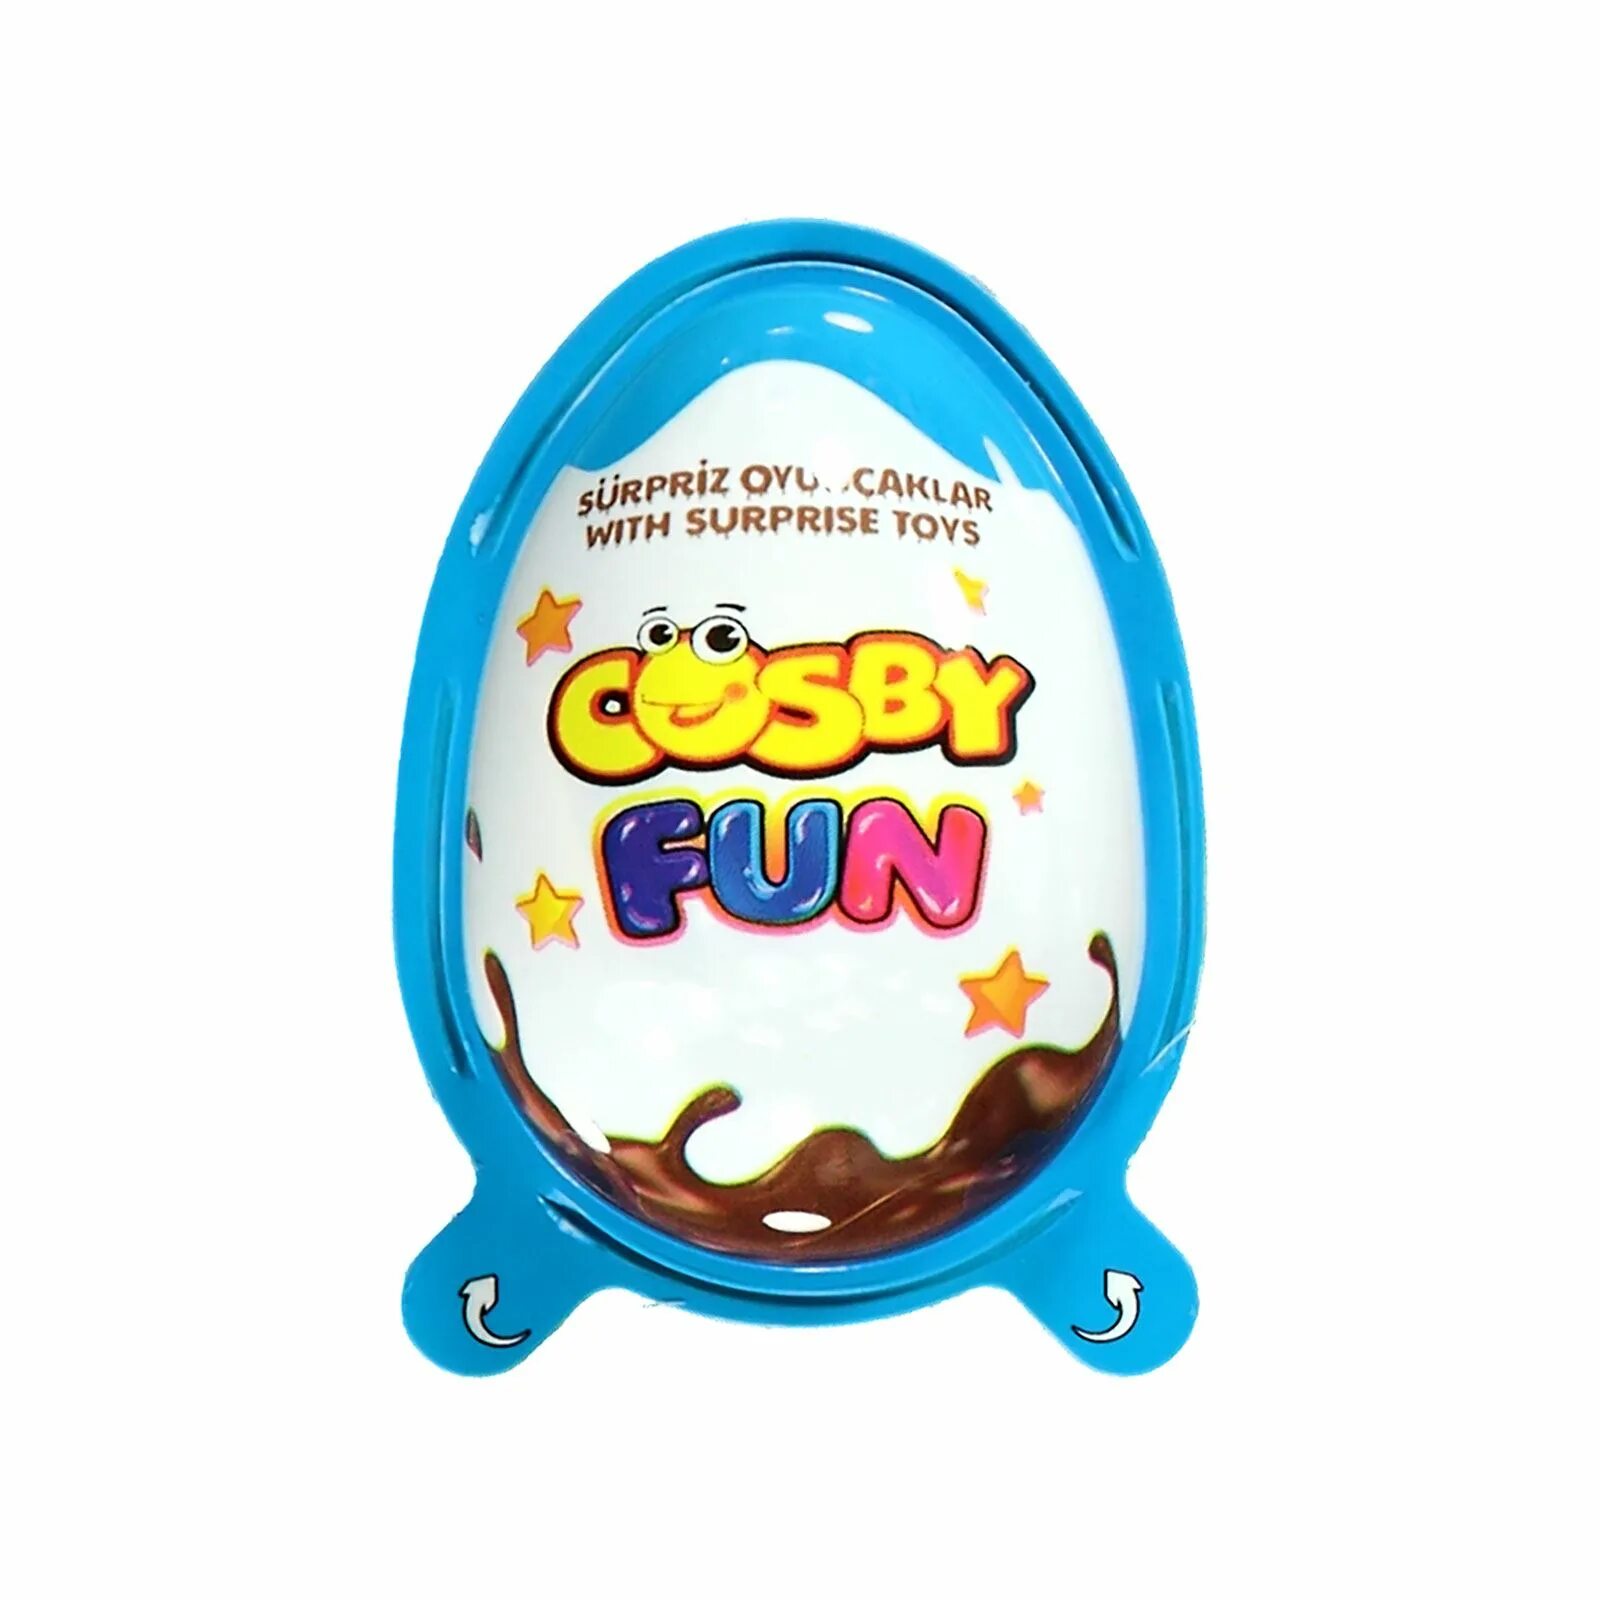 Cosby fun шоколадное яйцо. Шоколадное яйцо Косби фан для мальчиков. Бебето яйцо в комплекте с игрушкой Cosby fun1. Канфет Молочни. Fun 20